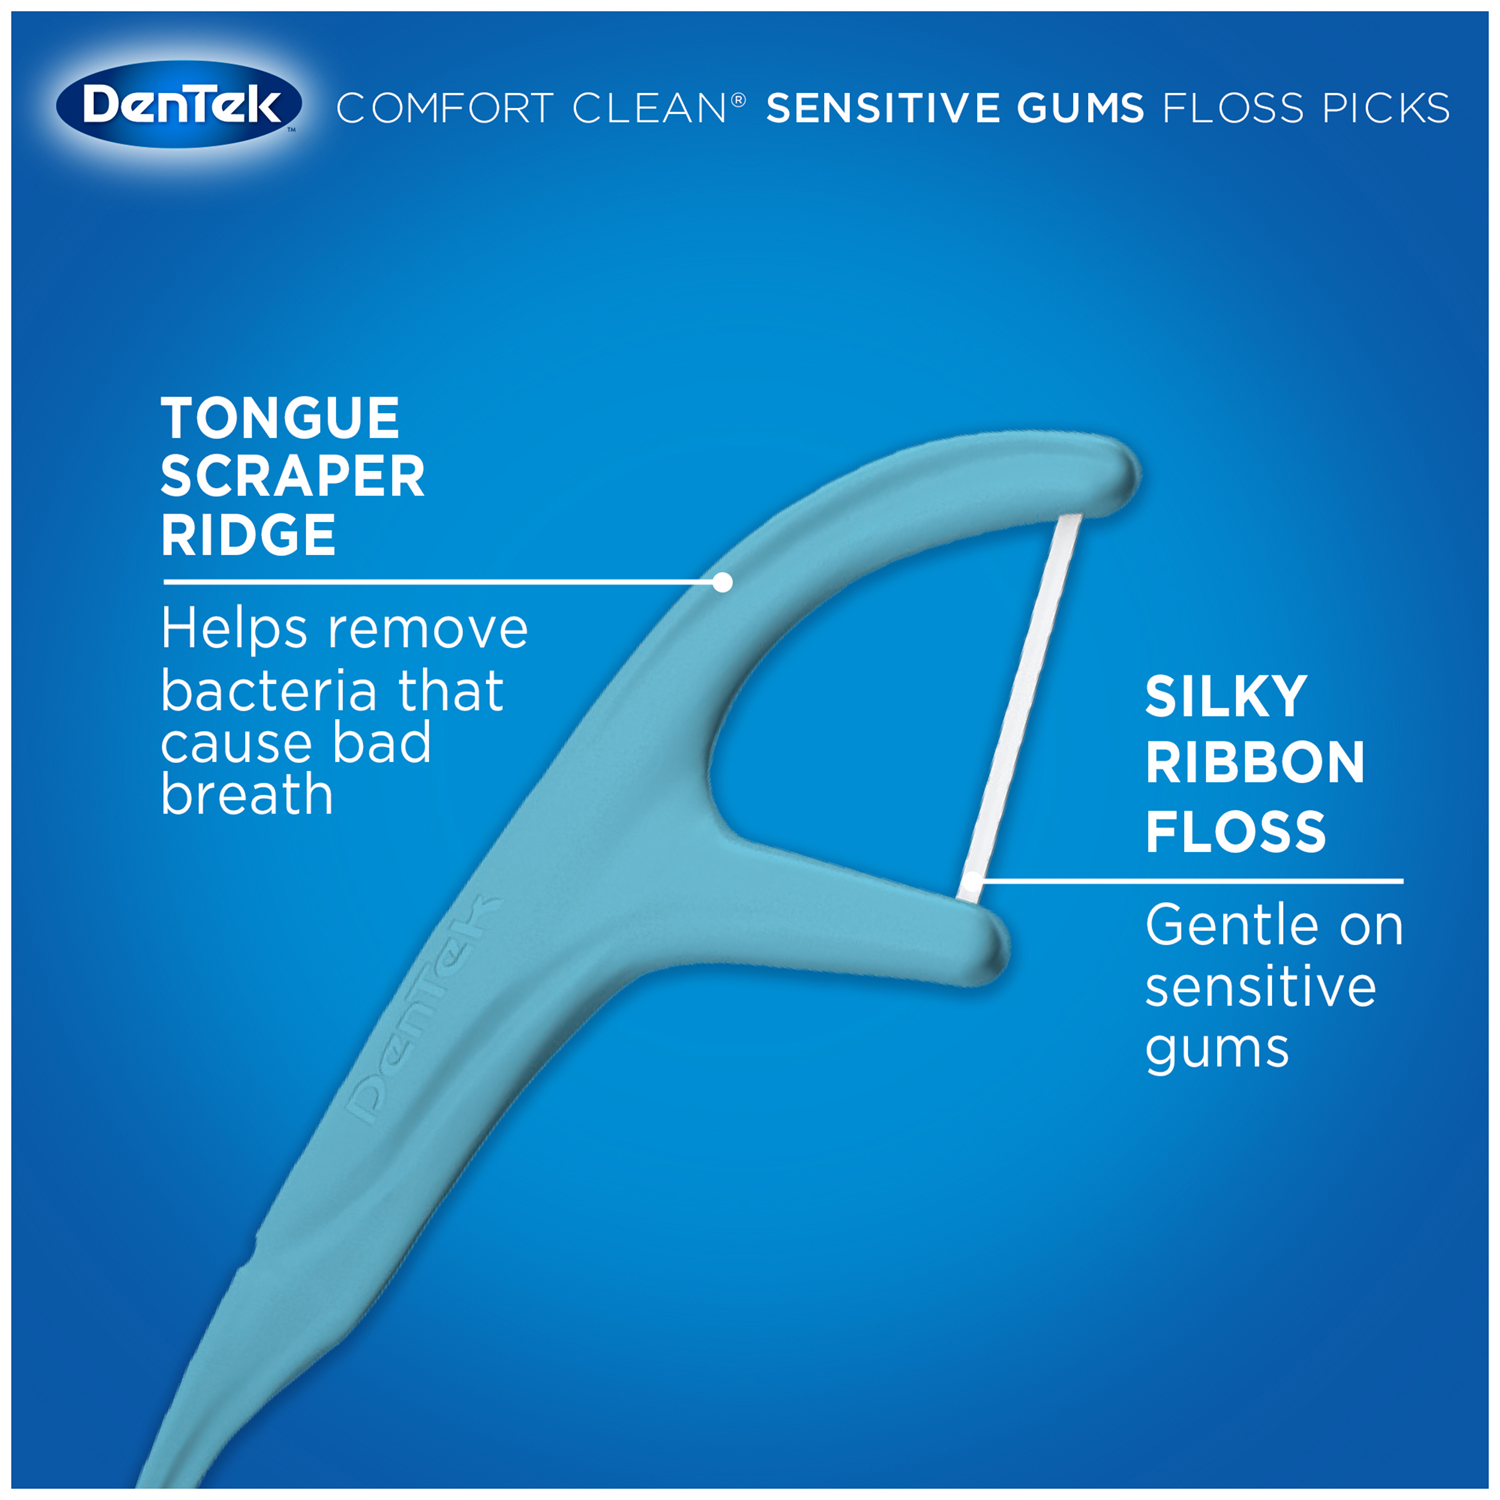 DenTek Comfort Clean Sensitive Gums Floss Picks, Soft & Silky Ribbon, 90 Count - image 3 of 7